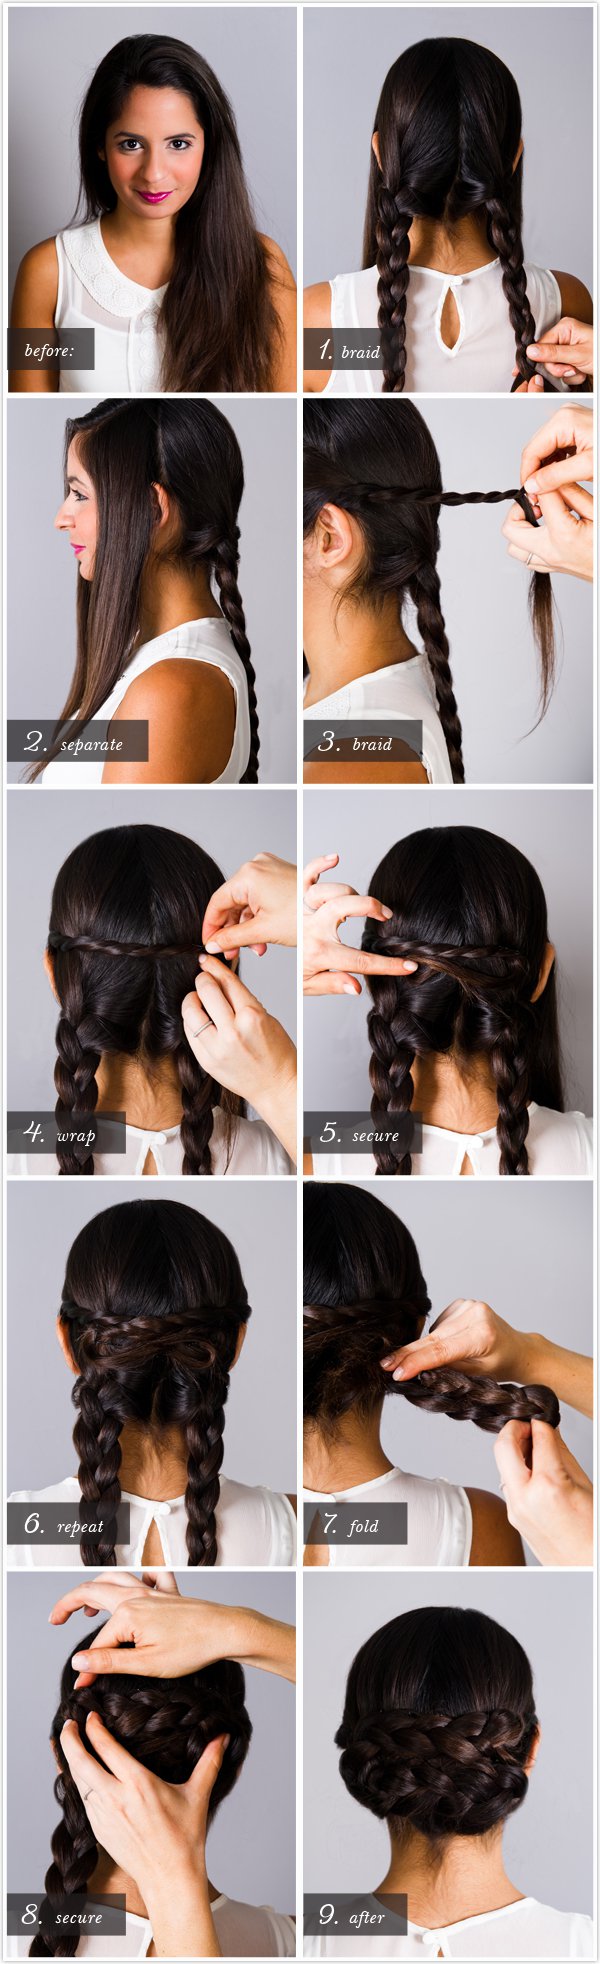 5 minutes hair tutorials